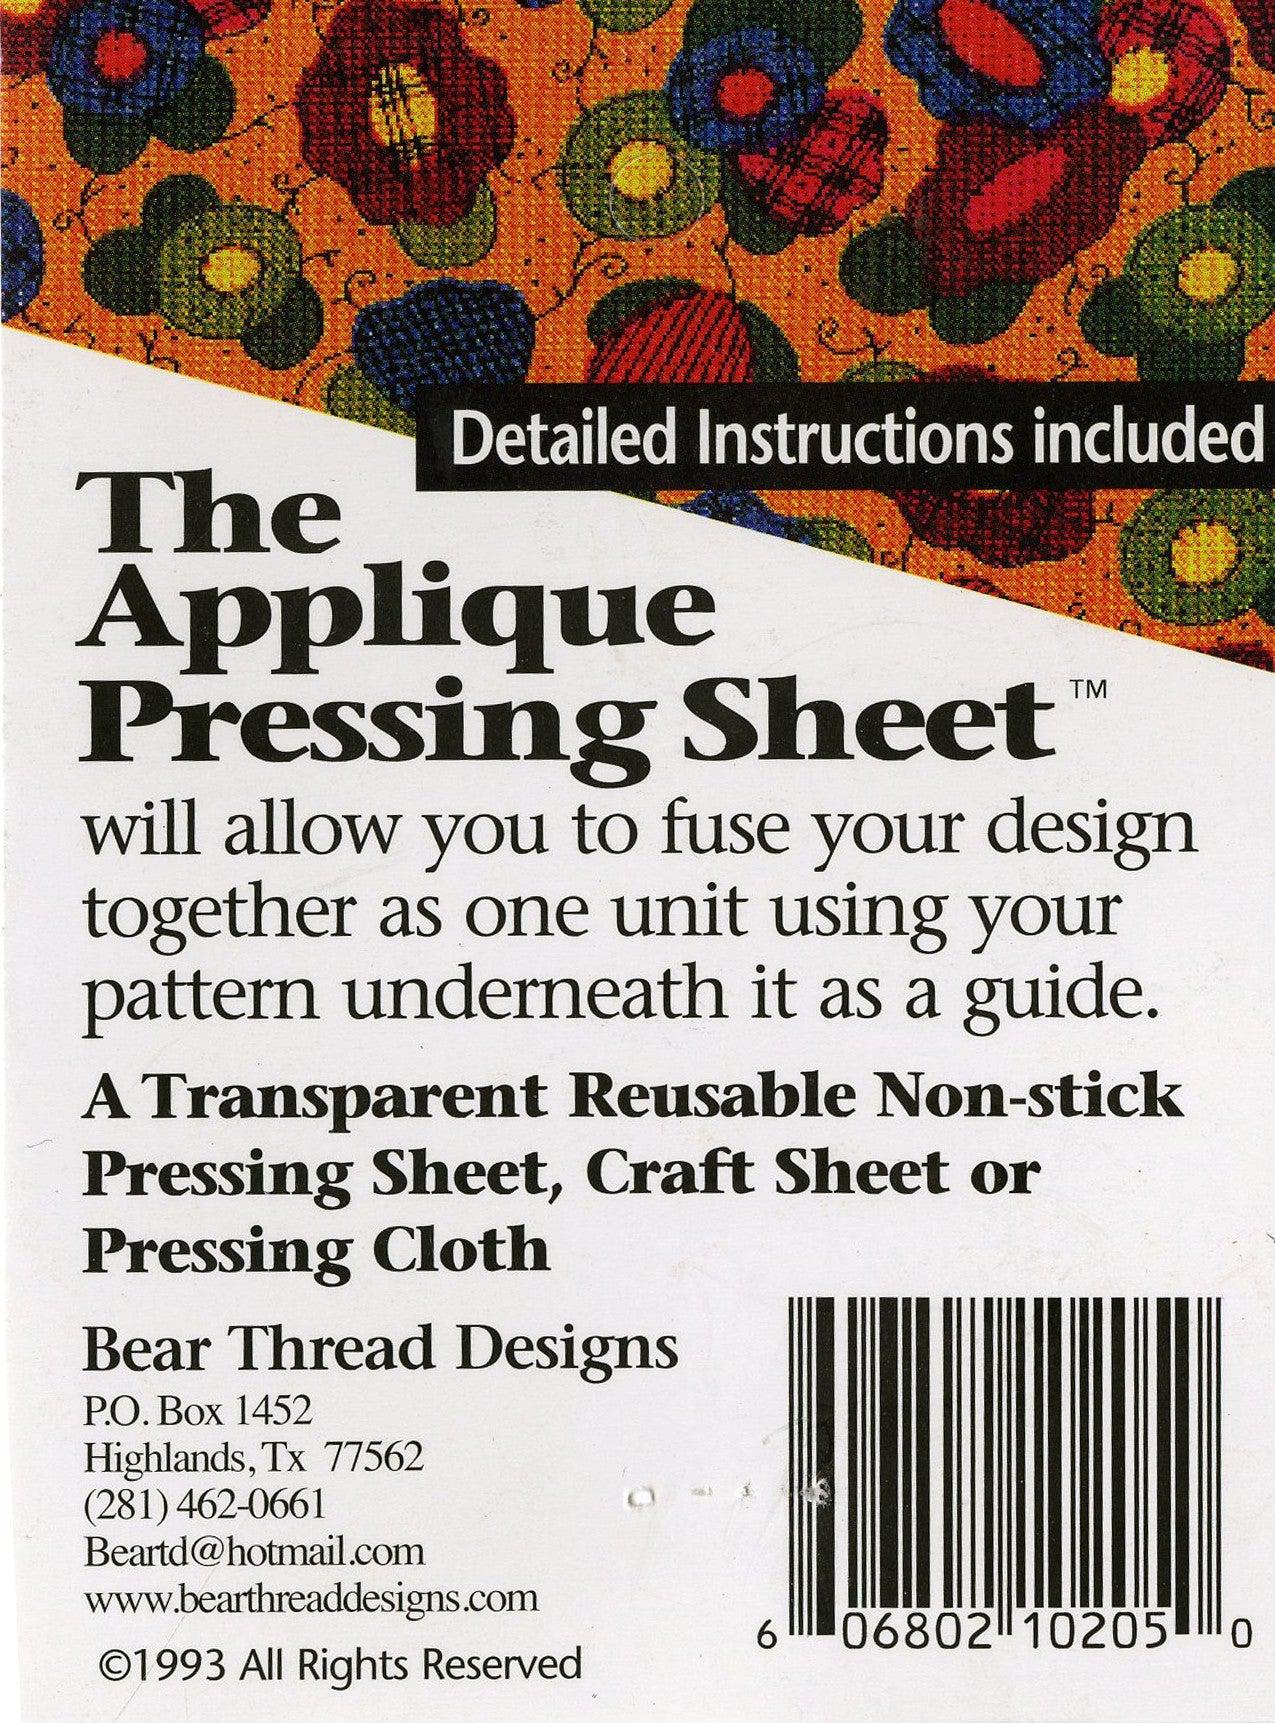 Applique Pressing Sheet 13"x 17"-Bear Thread Designs-My Favorite Quilt Store